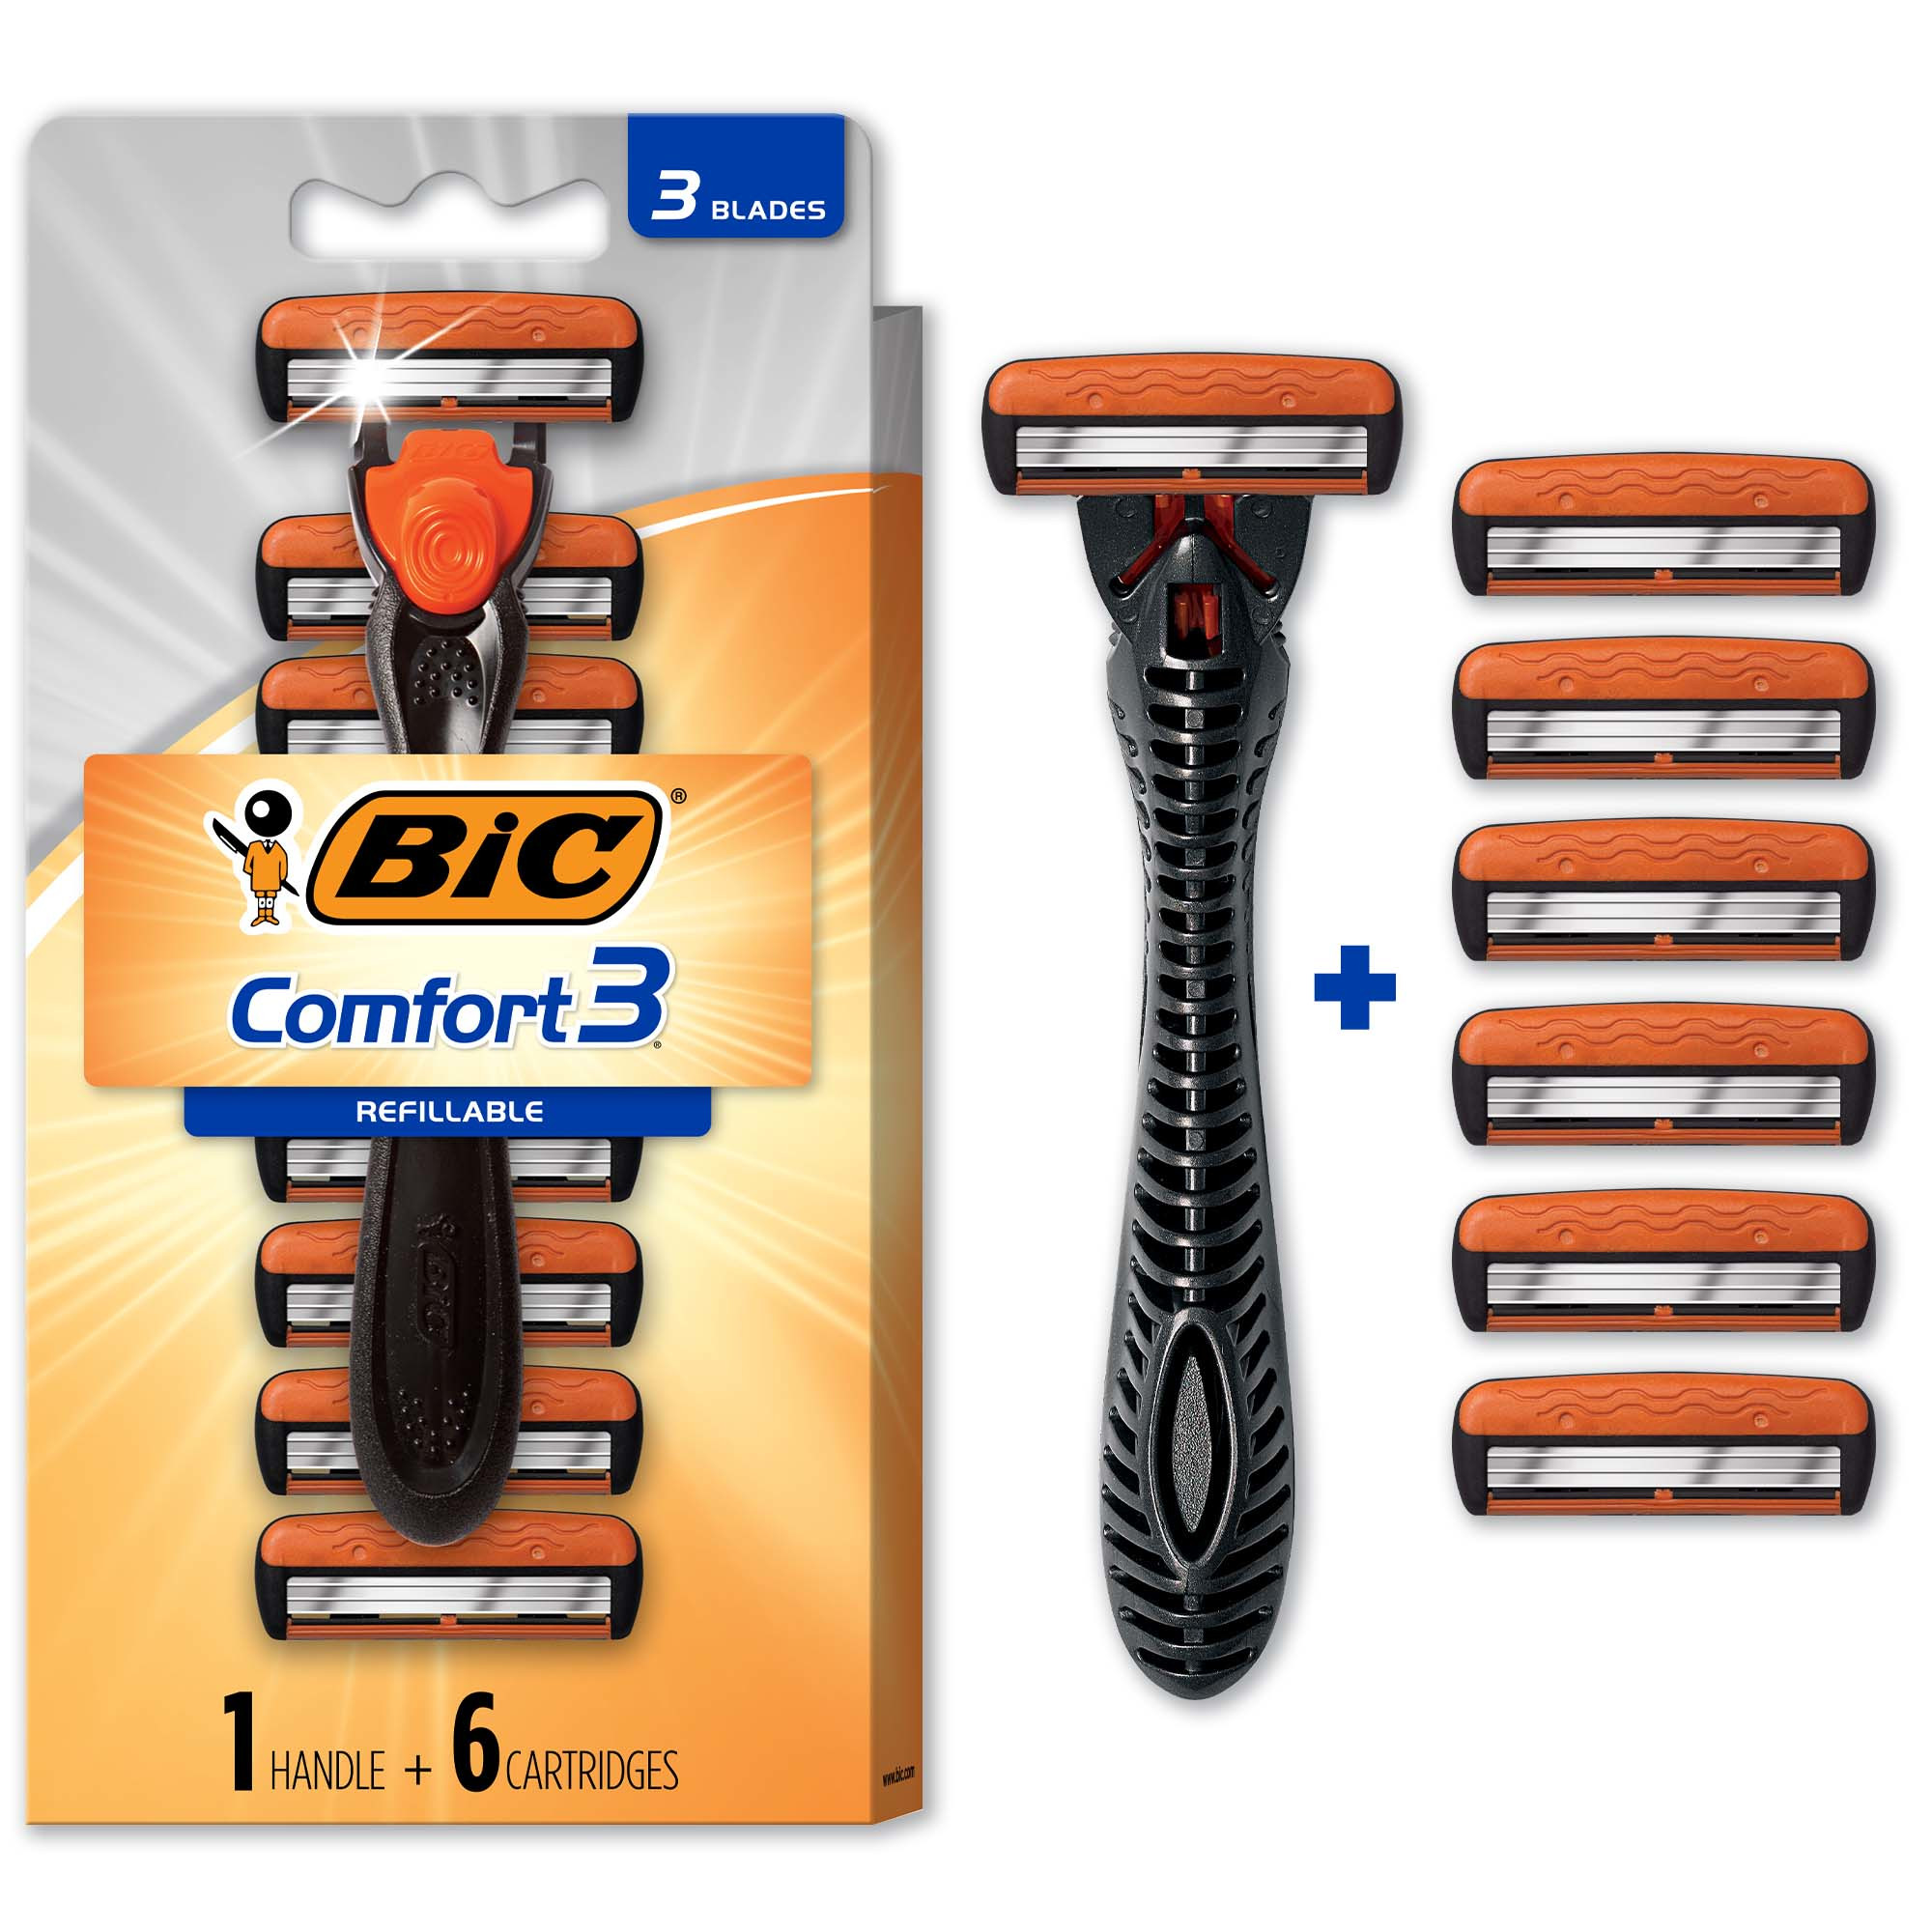 BIC Comfort 3 Hybrid Men's Disposable Razor, Sensitive Skin Razor, 1 Black Handle and 6 Cartridges - image 1 of 10